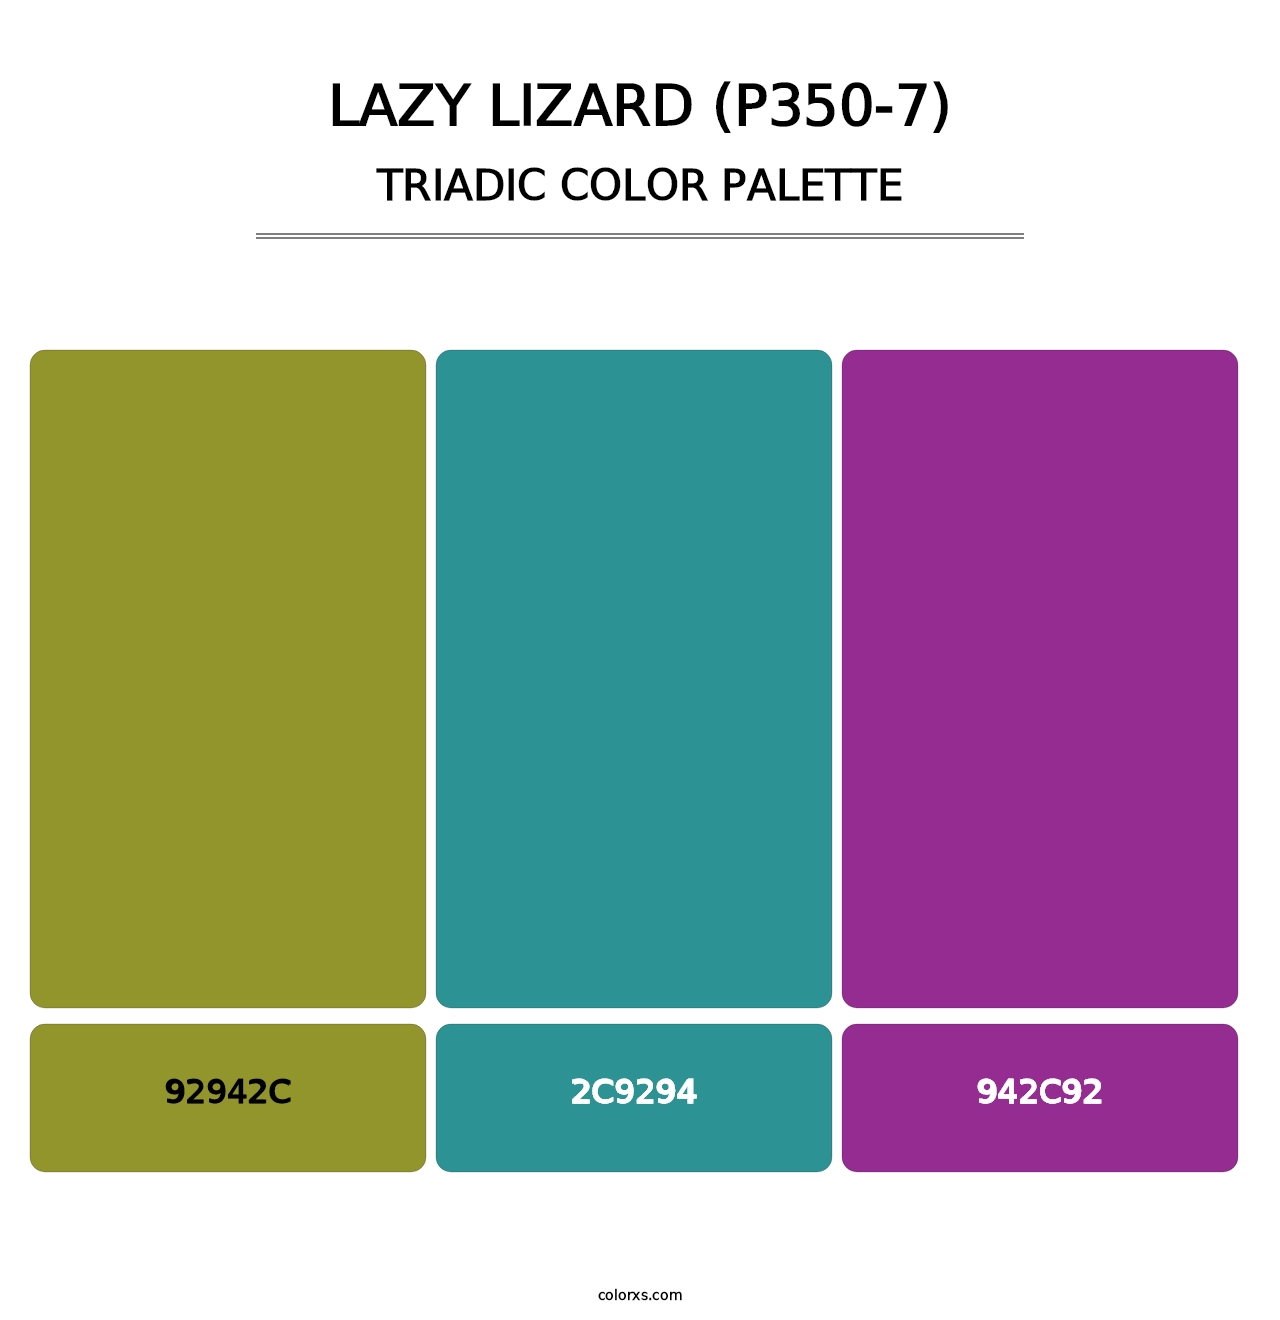 Lazy Lizard (P350-7) - Triadic Color Palette